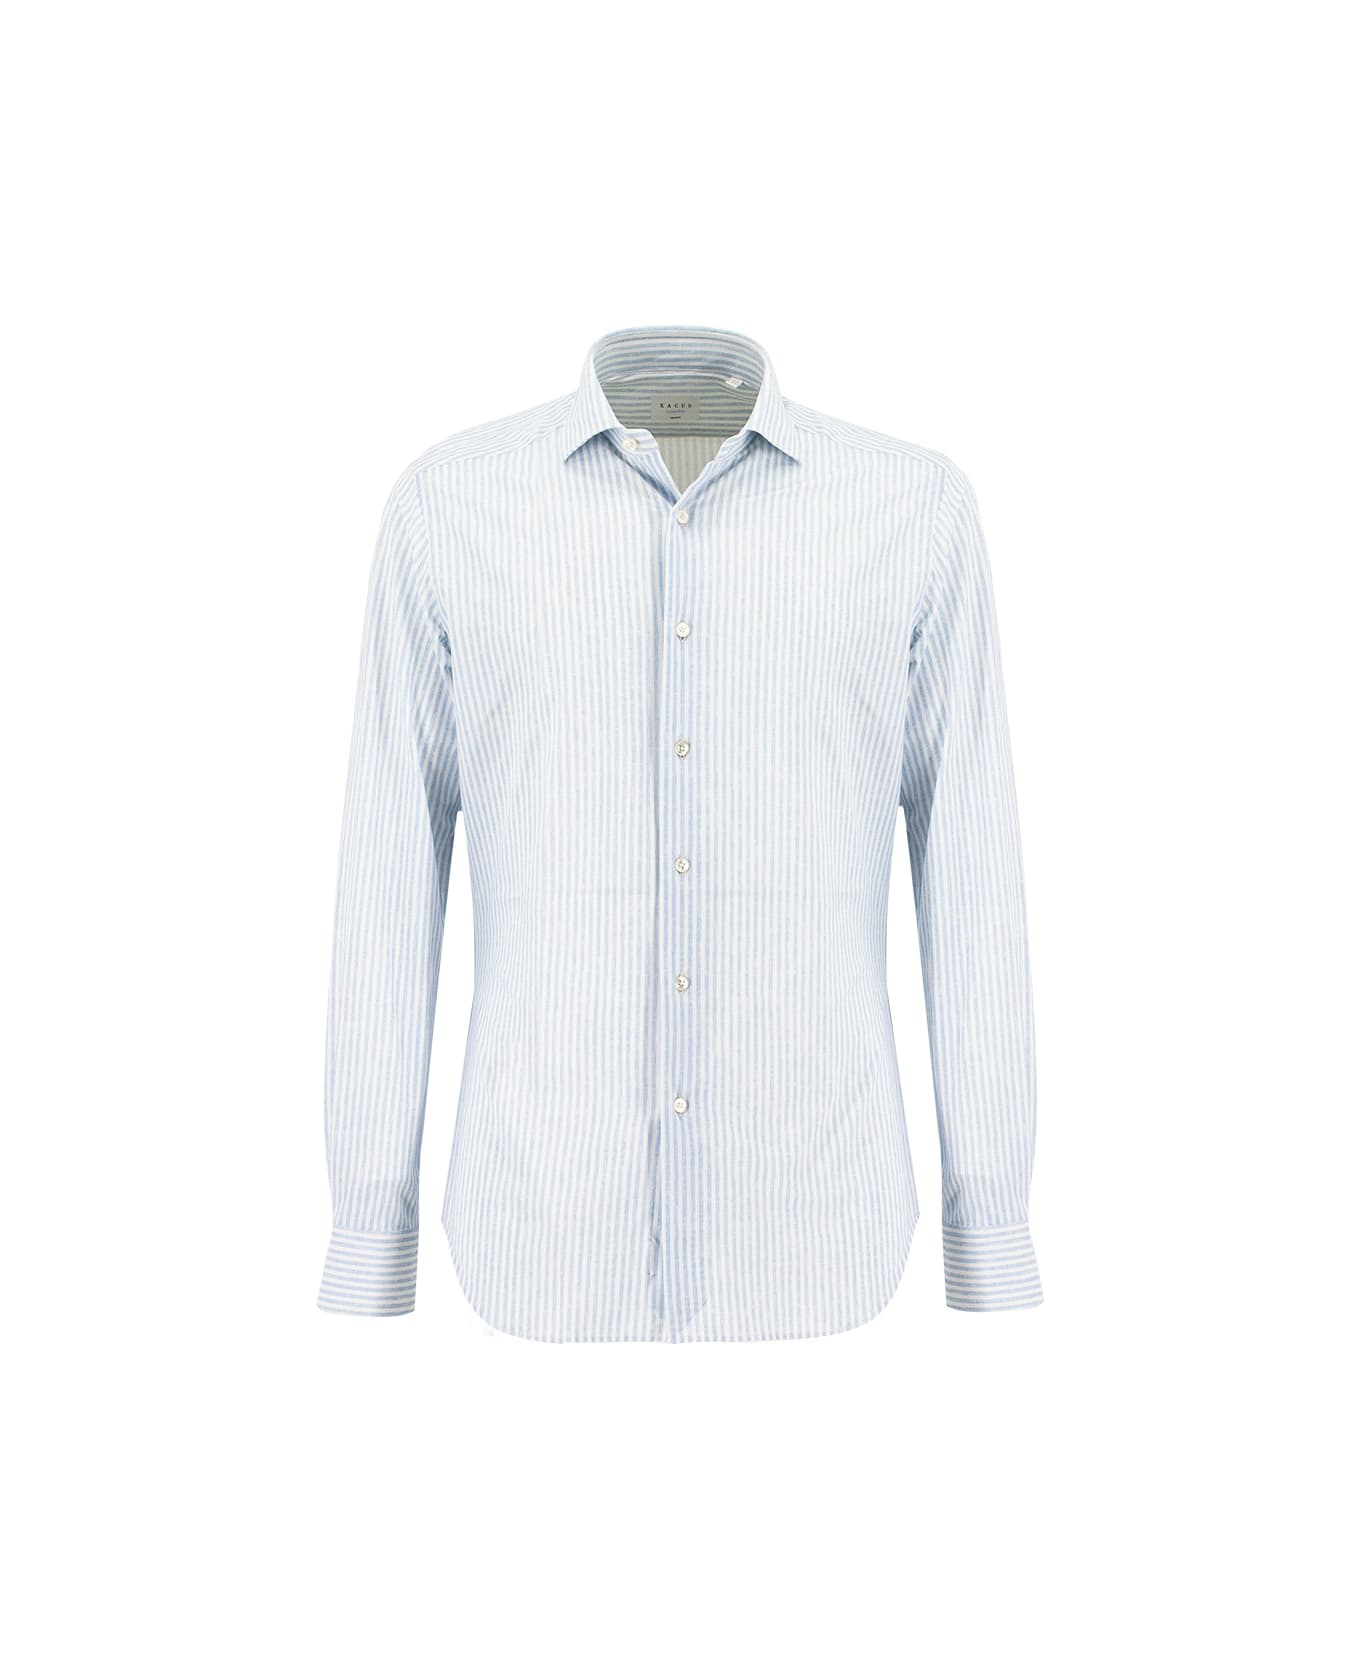 Xacus Shirt - STRIPE LIGHT BLUE+WHITE